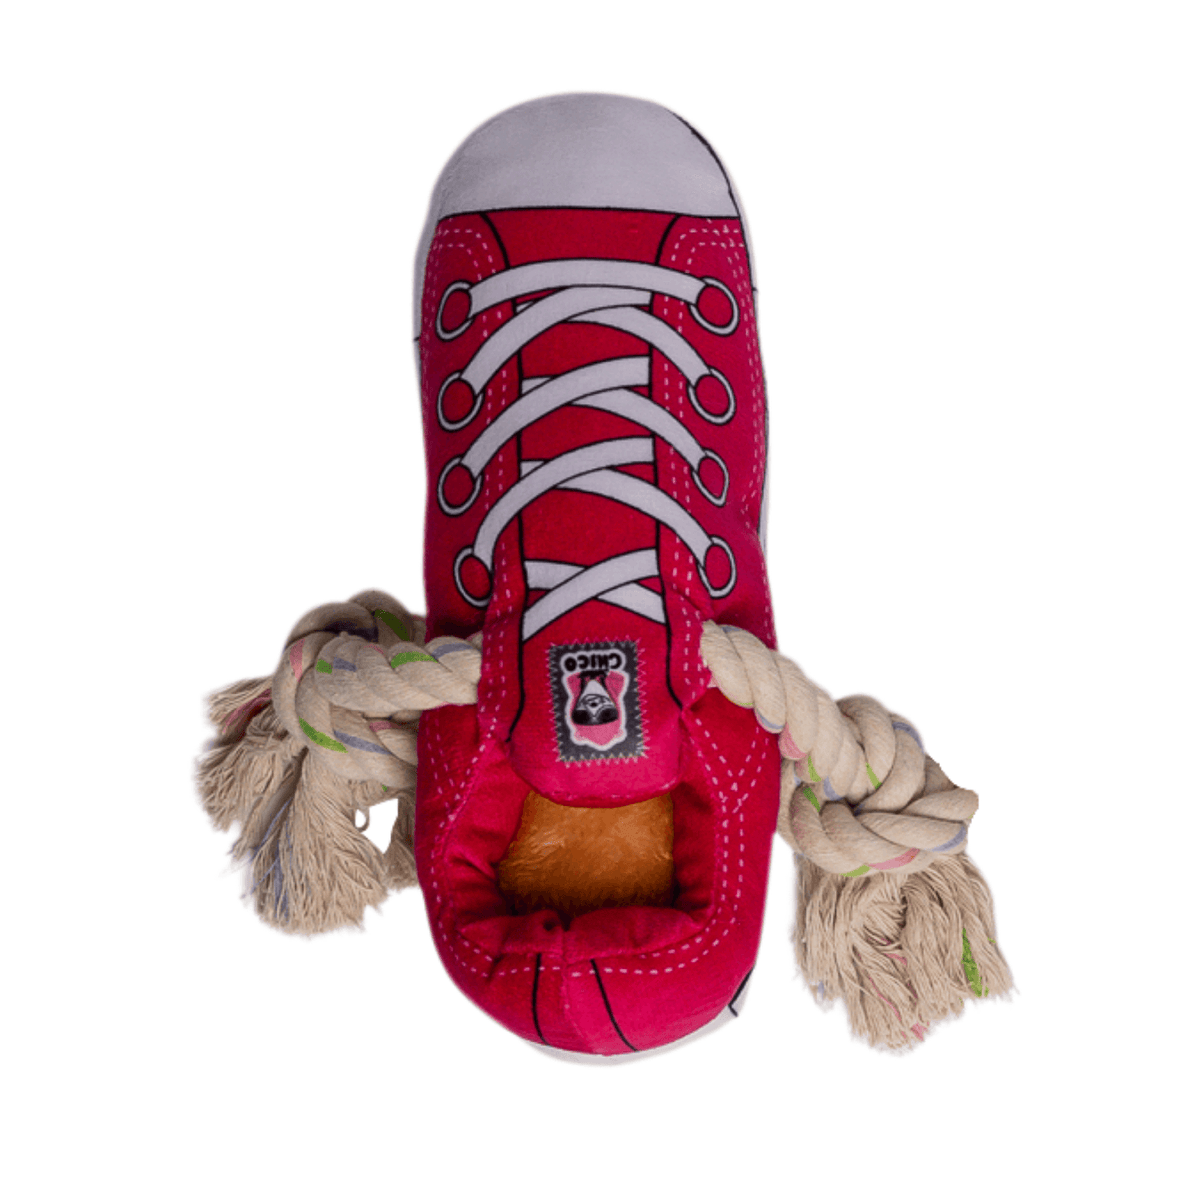 Squeaking Comfort Plush Sneaker Dog Toy - Pink FajarShuruqSA